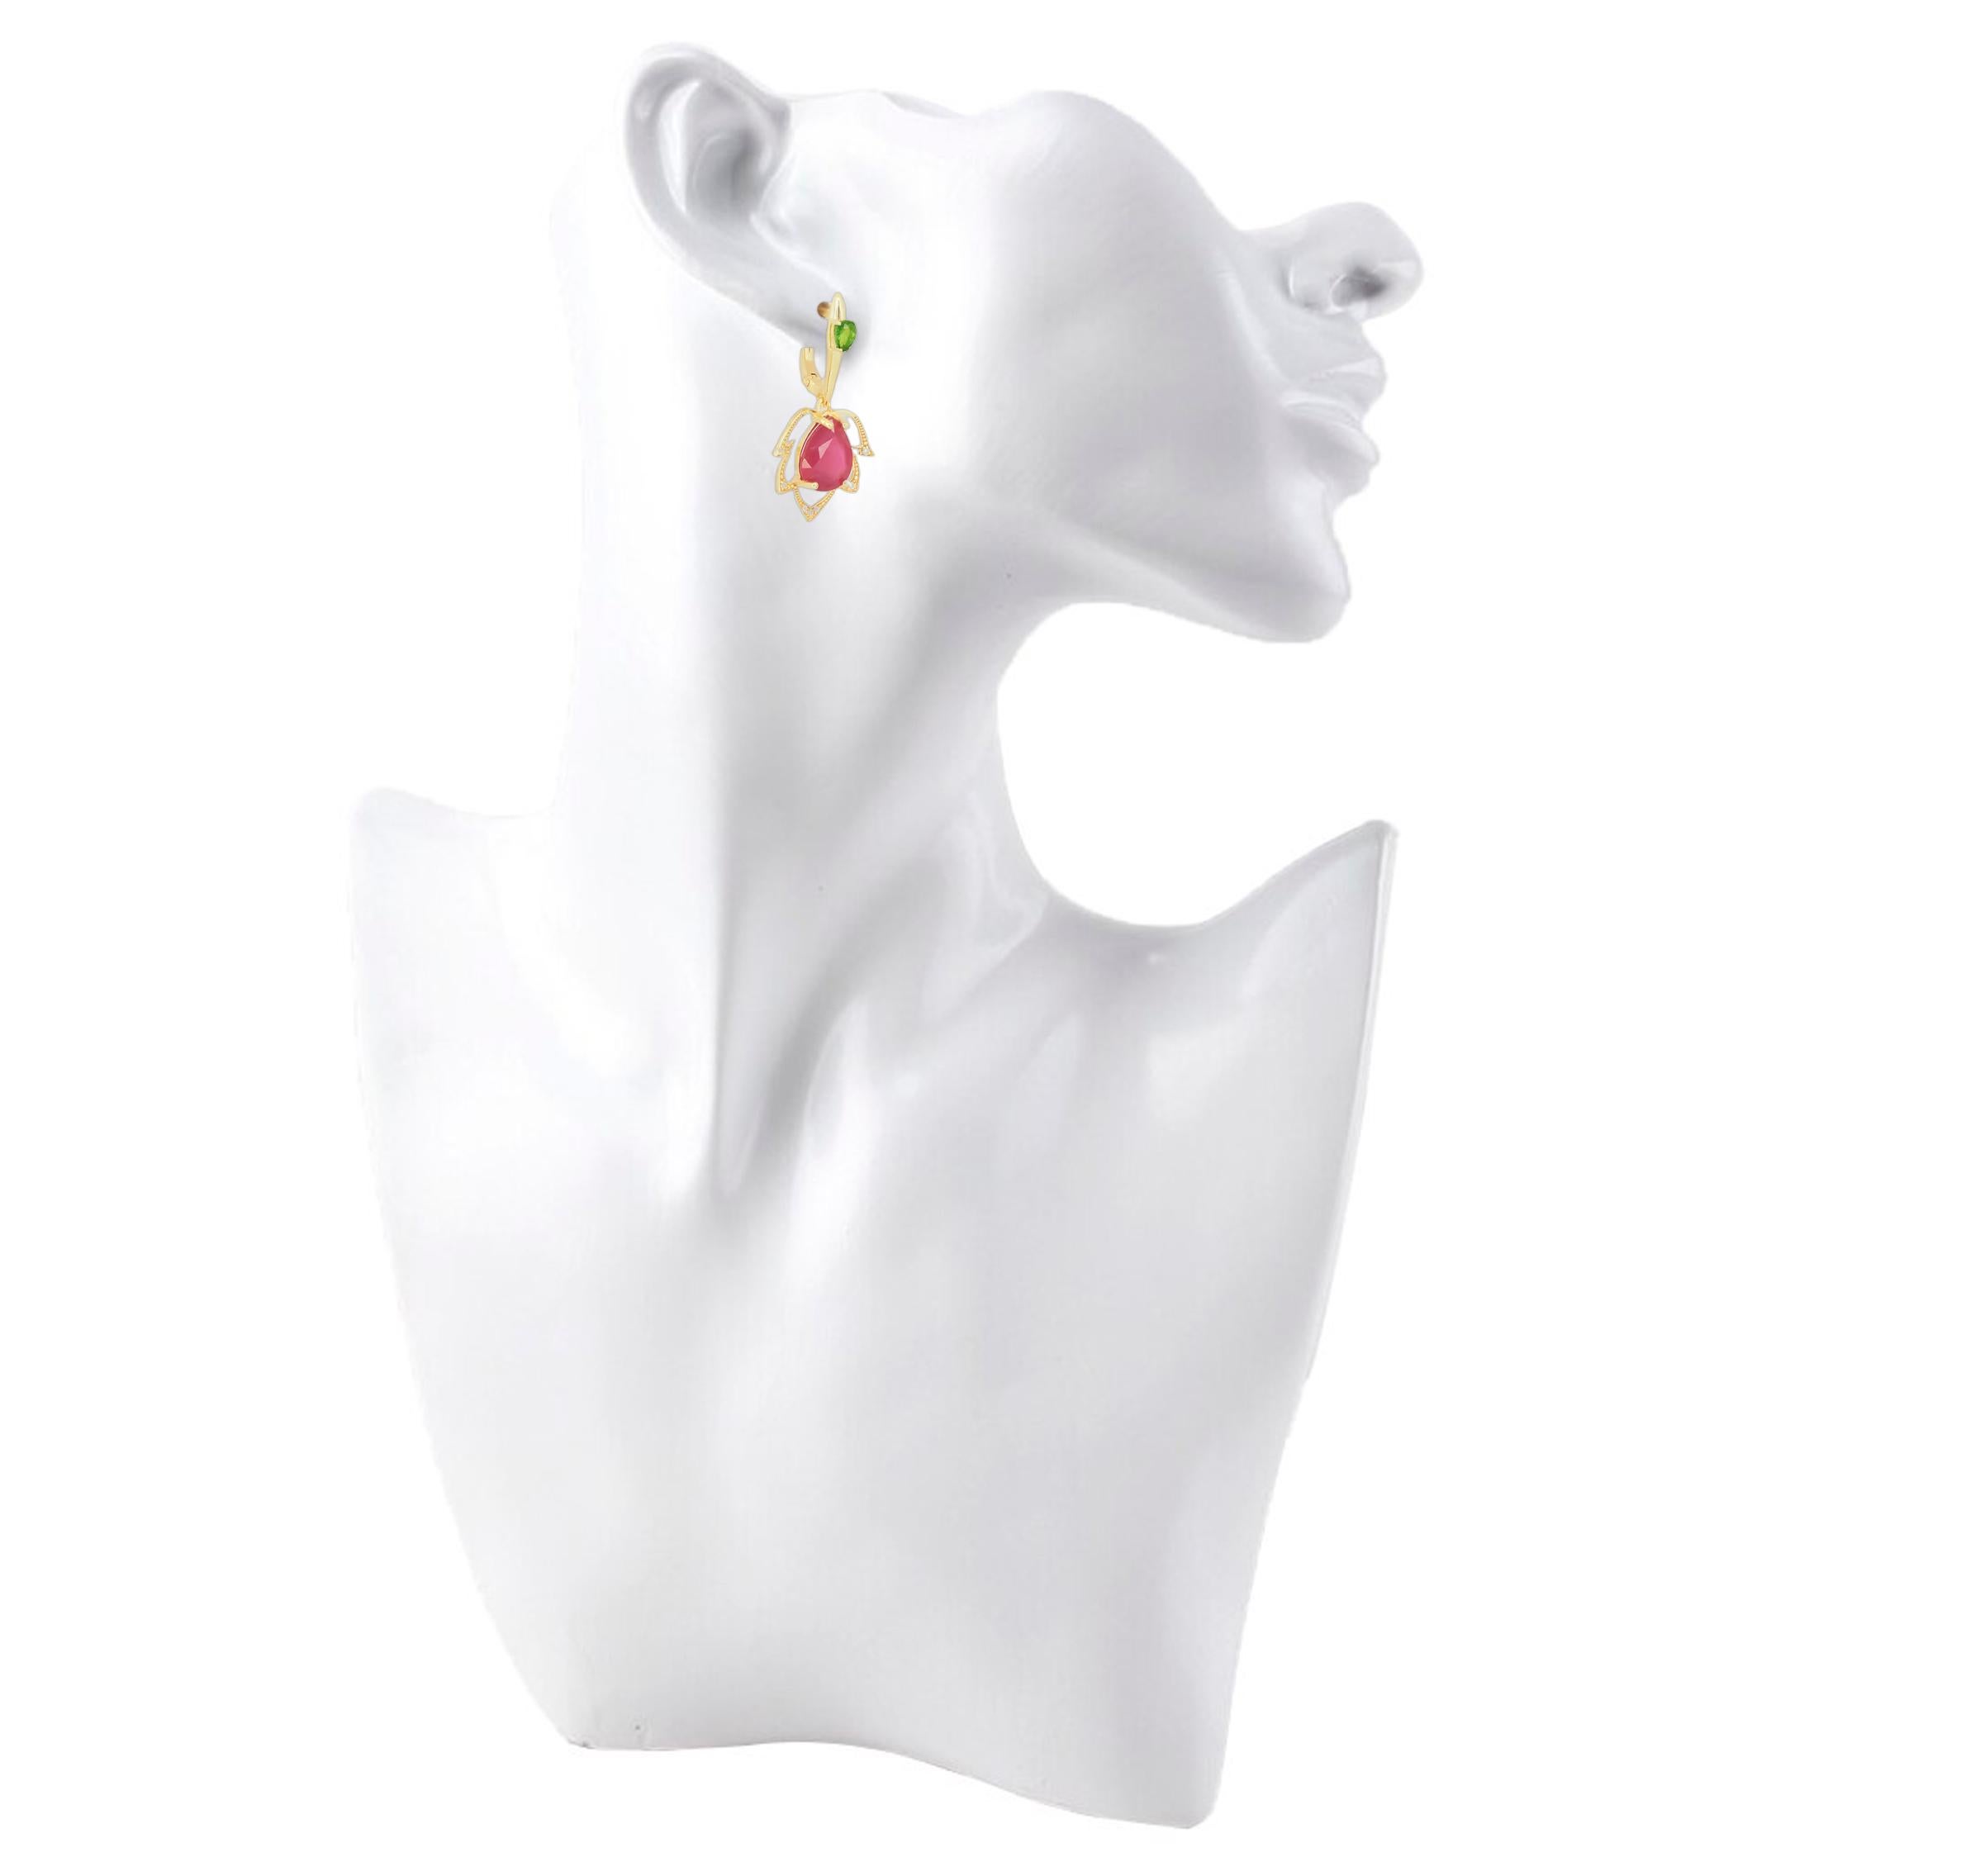 Genuine Pear ruby flower earrings. 3